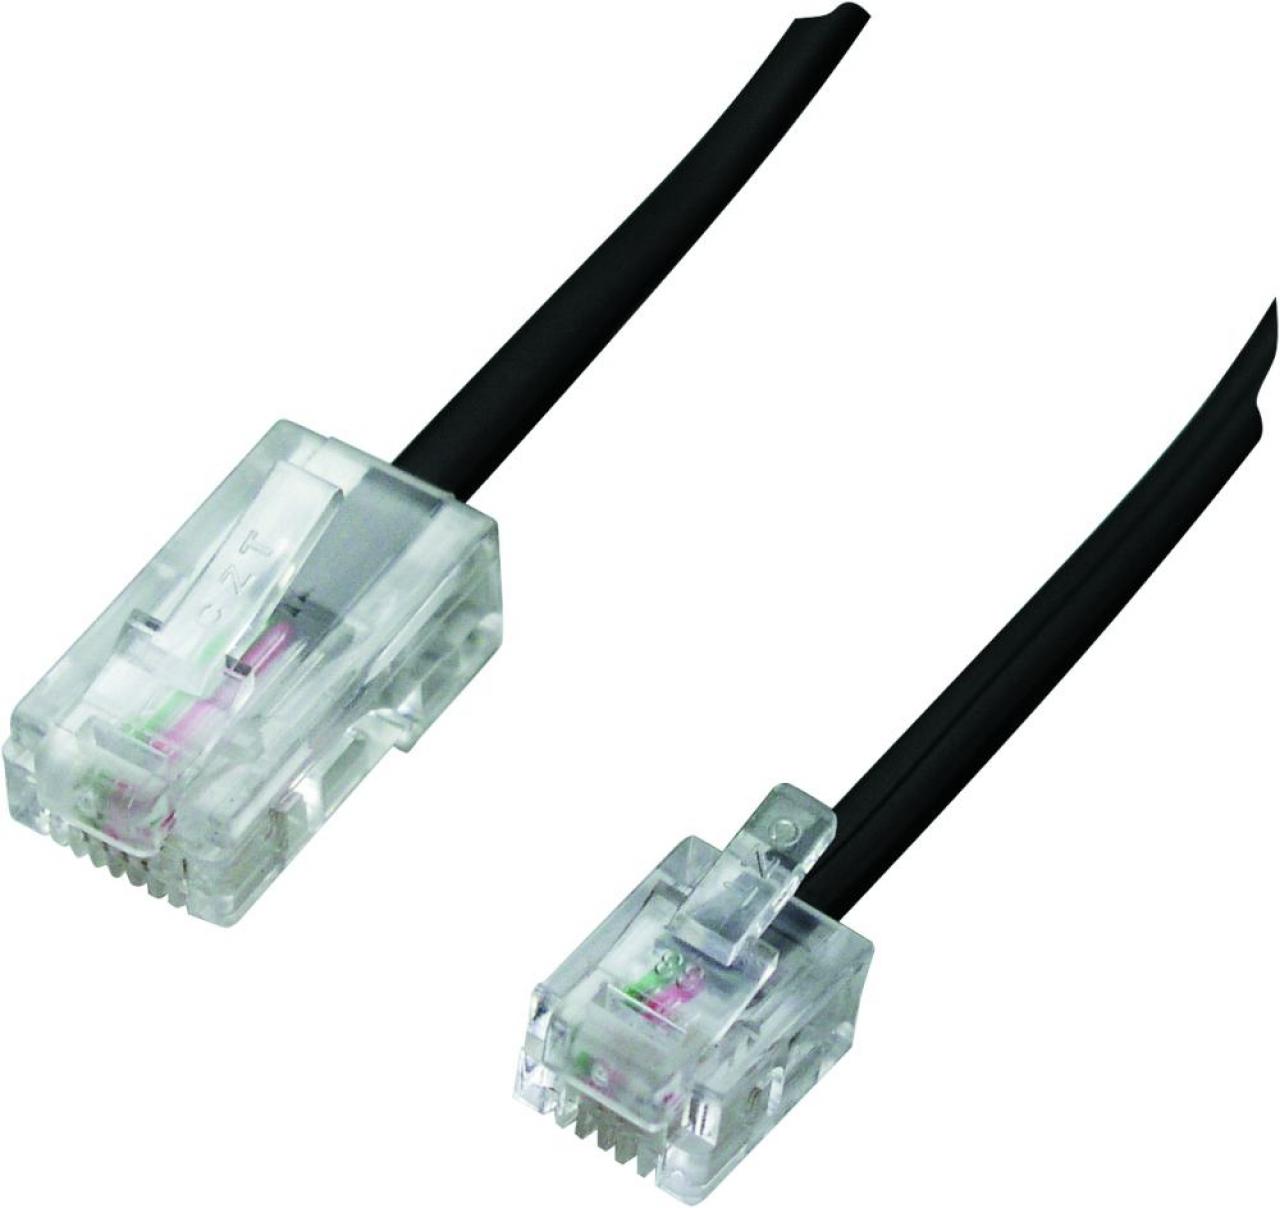 ISDN connection cable RJ45 Plug/RJ12 Plug 3m TAL 6631 Schwaiger Neu OVP